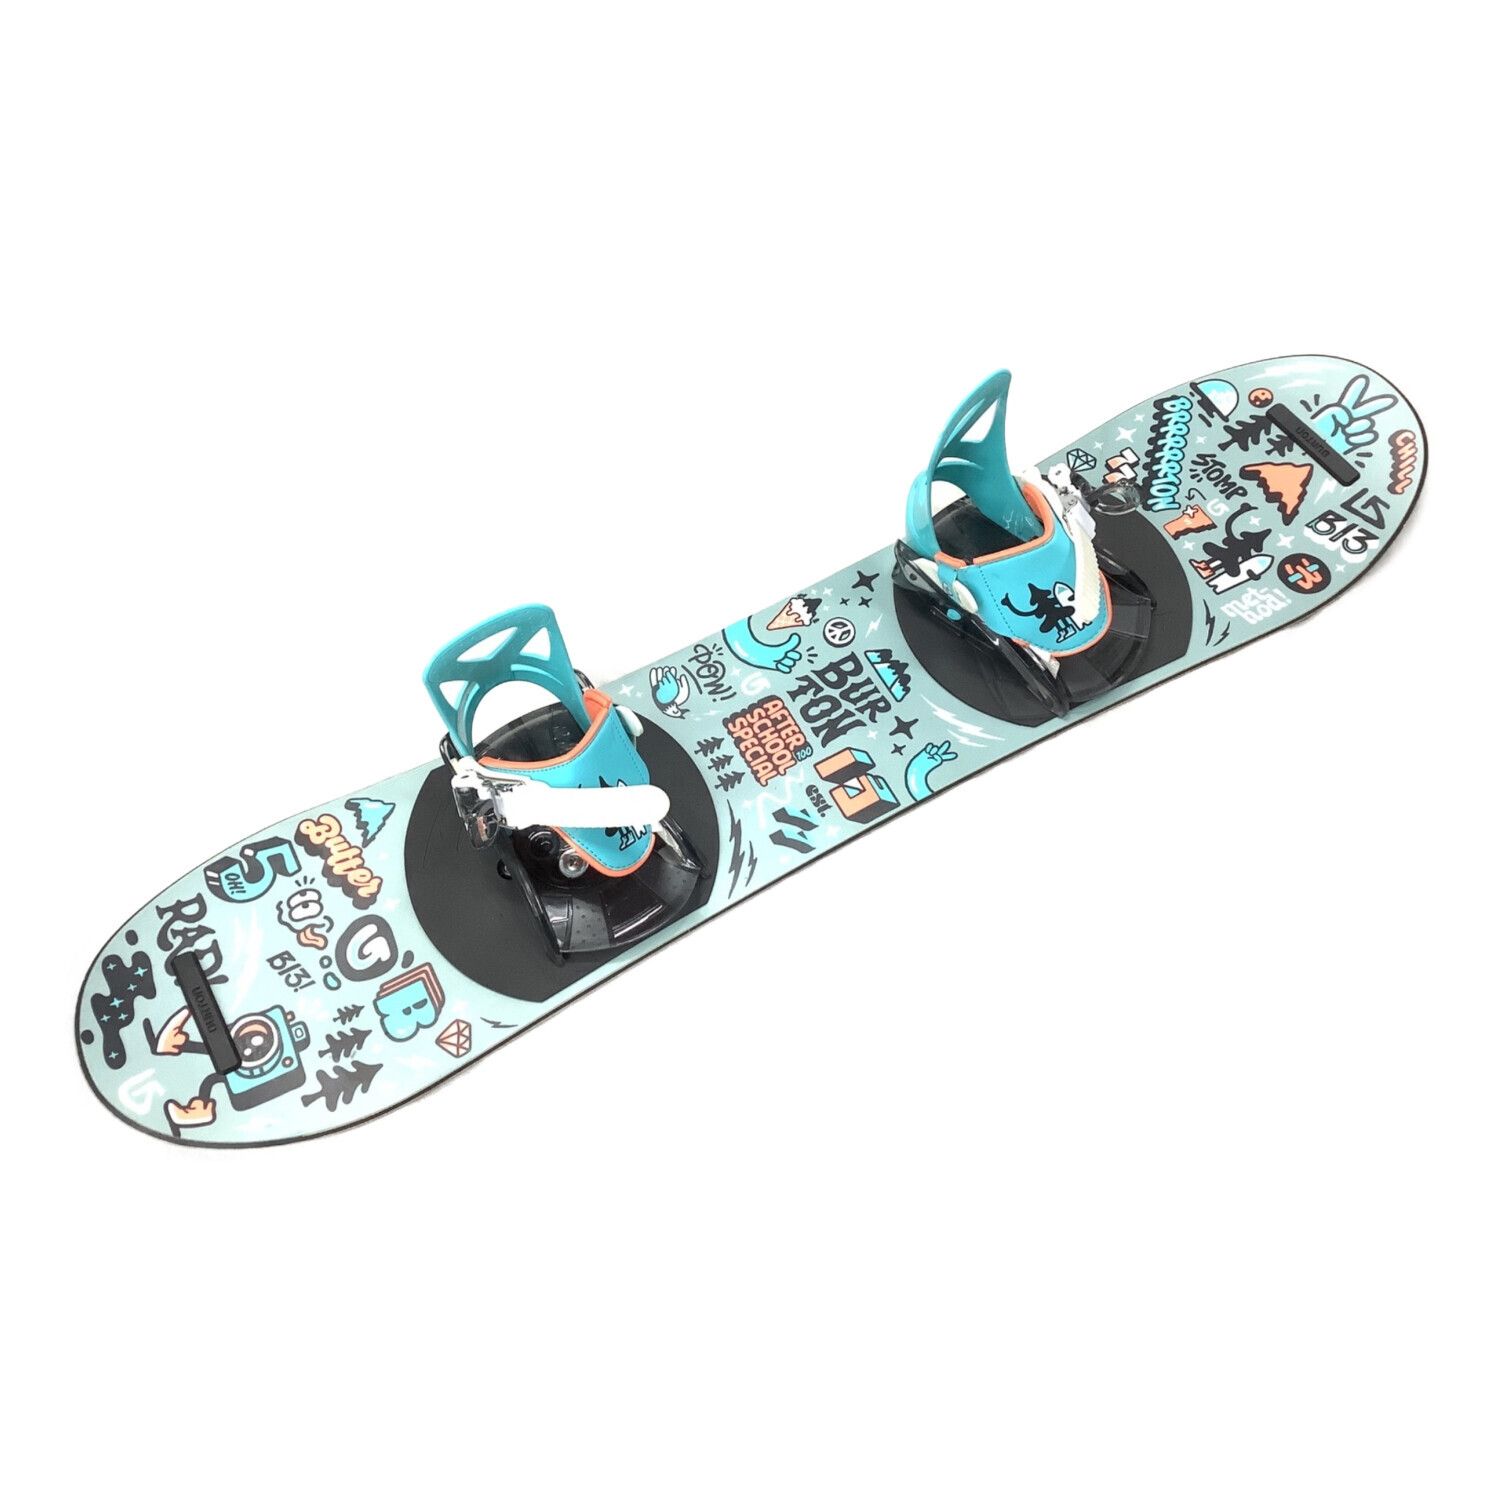 BURTON (バートン) スノーボード 100cm グレー×ブルー 3D ロッカー ...